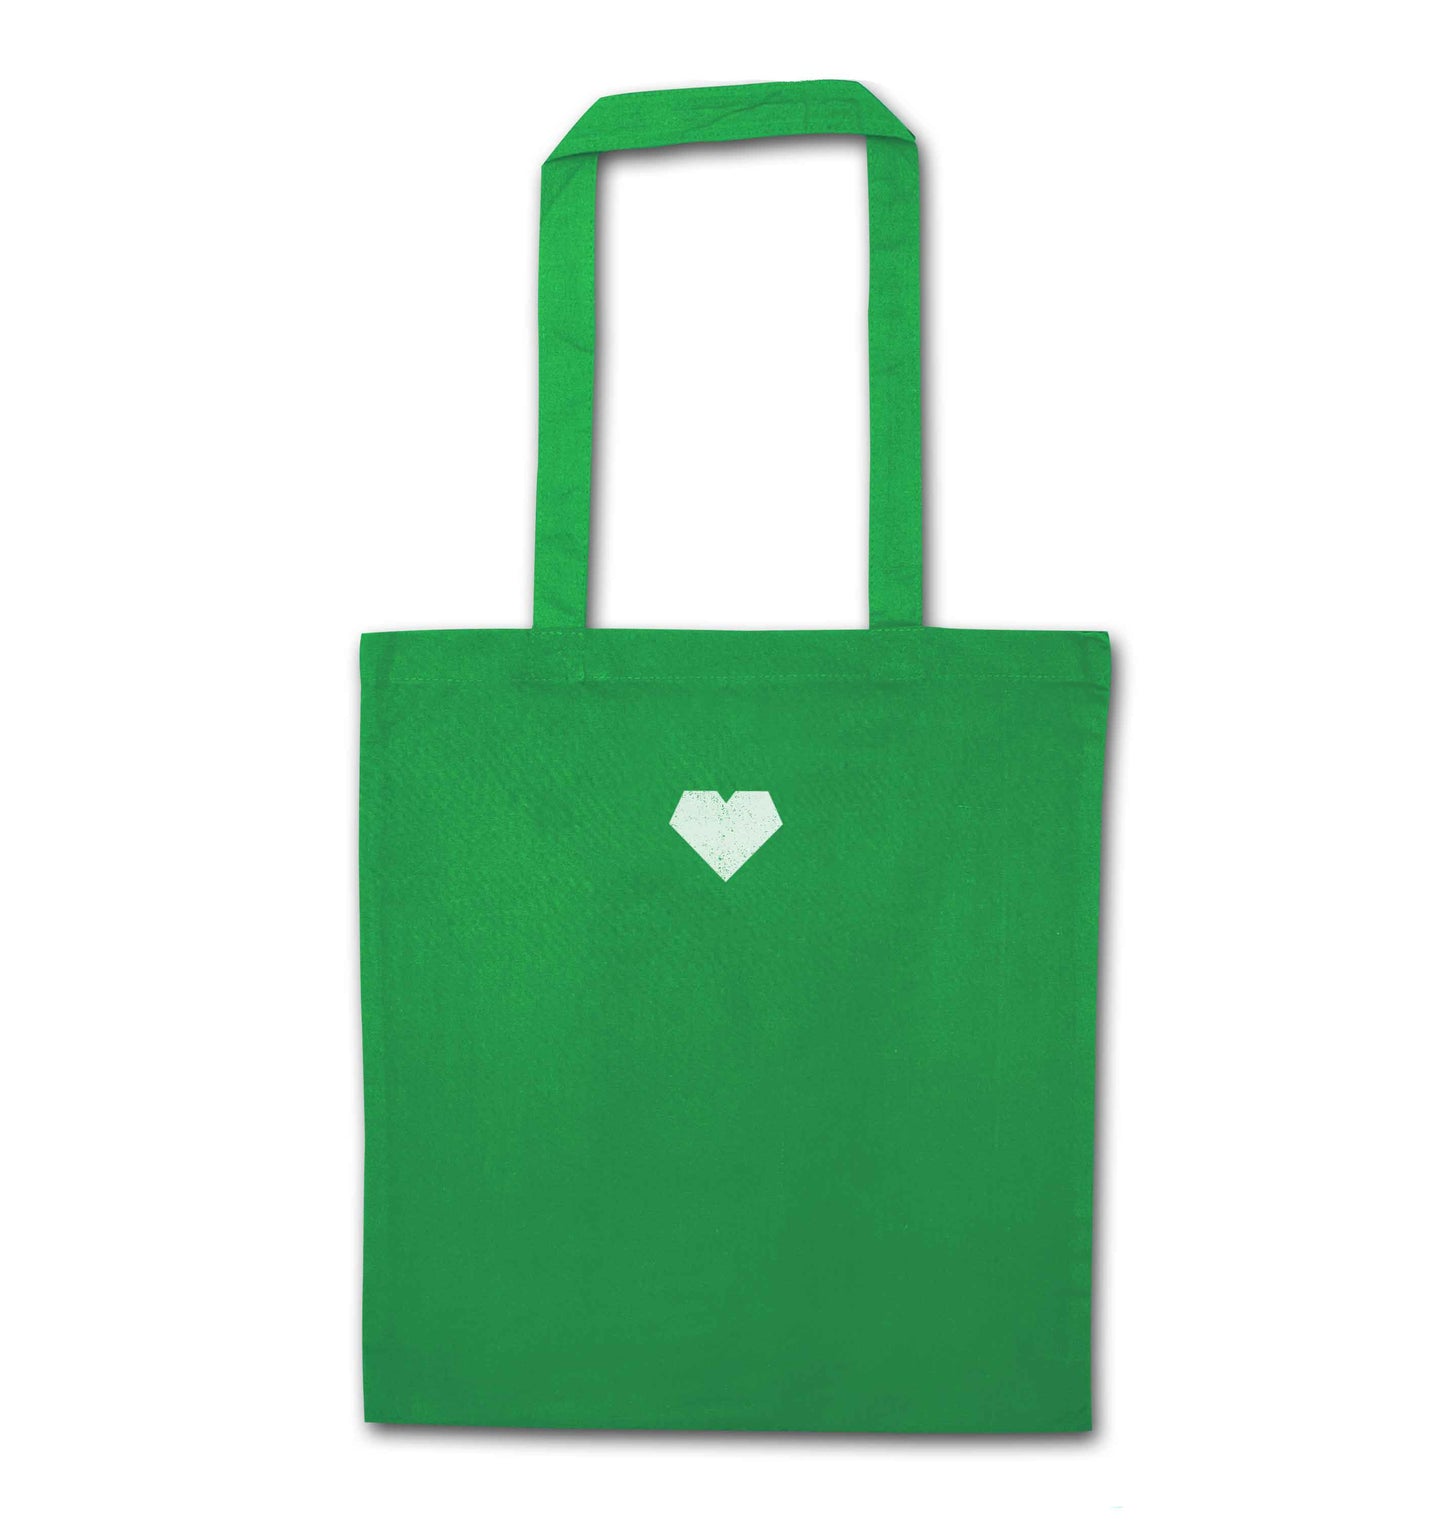 Tiny heart green tote bag